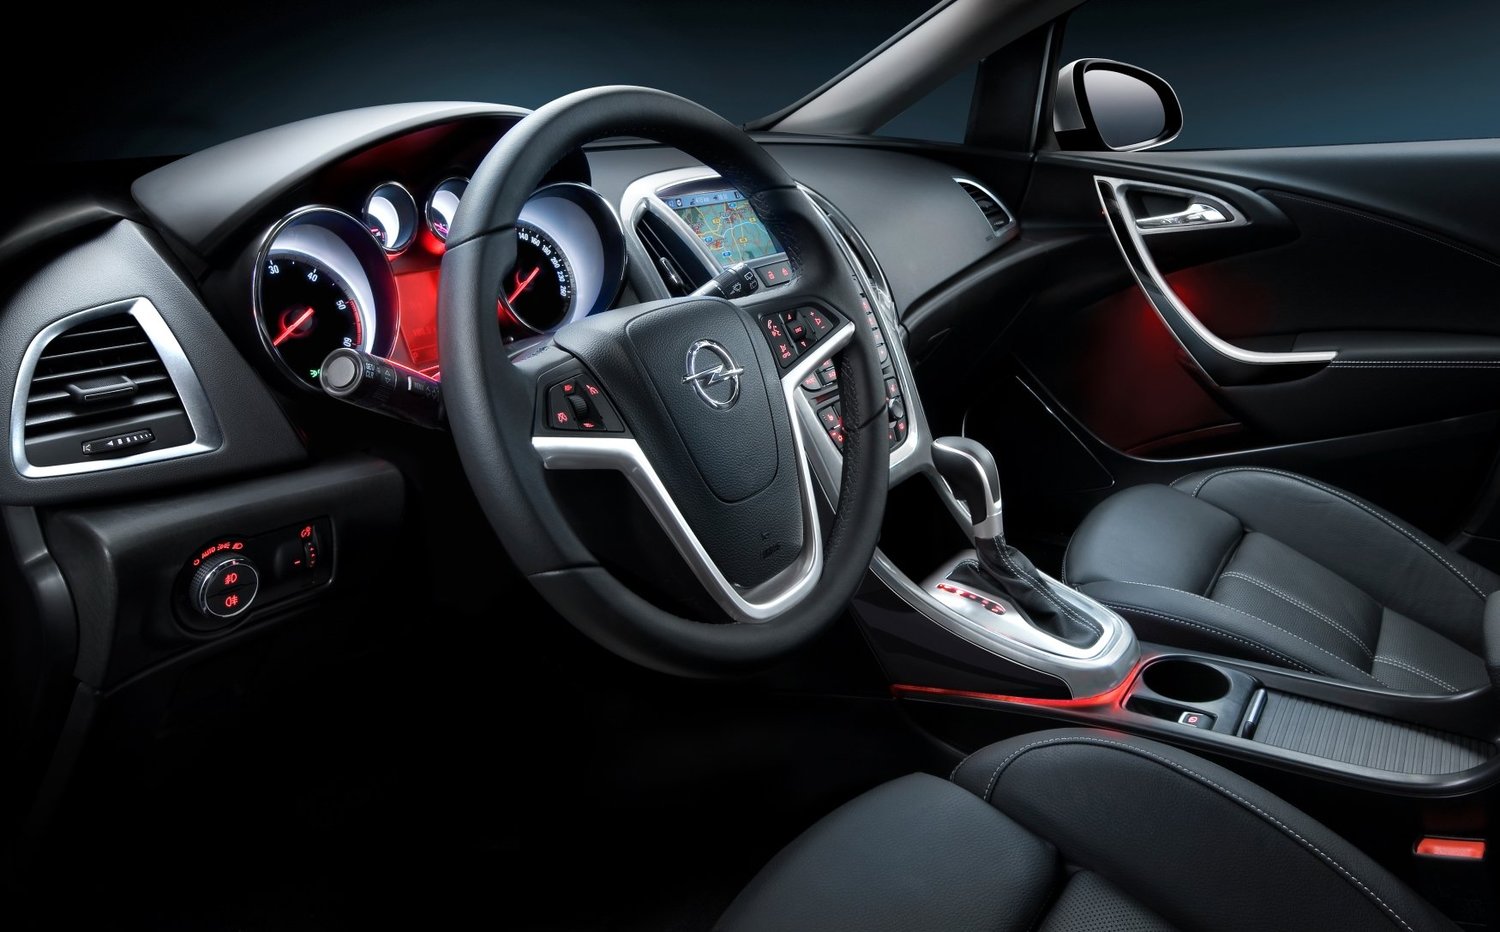 седан Opel Astra 2012 - 2016г выпуска модификация 1.2 MT (95 л.с.)